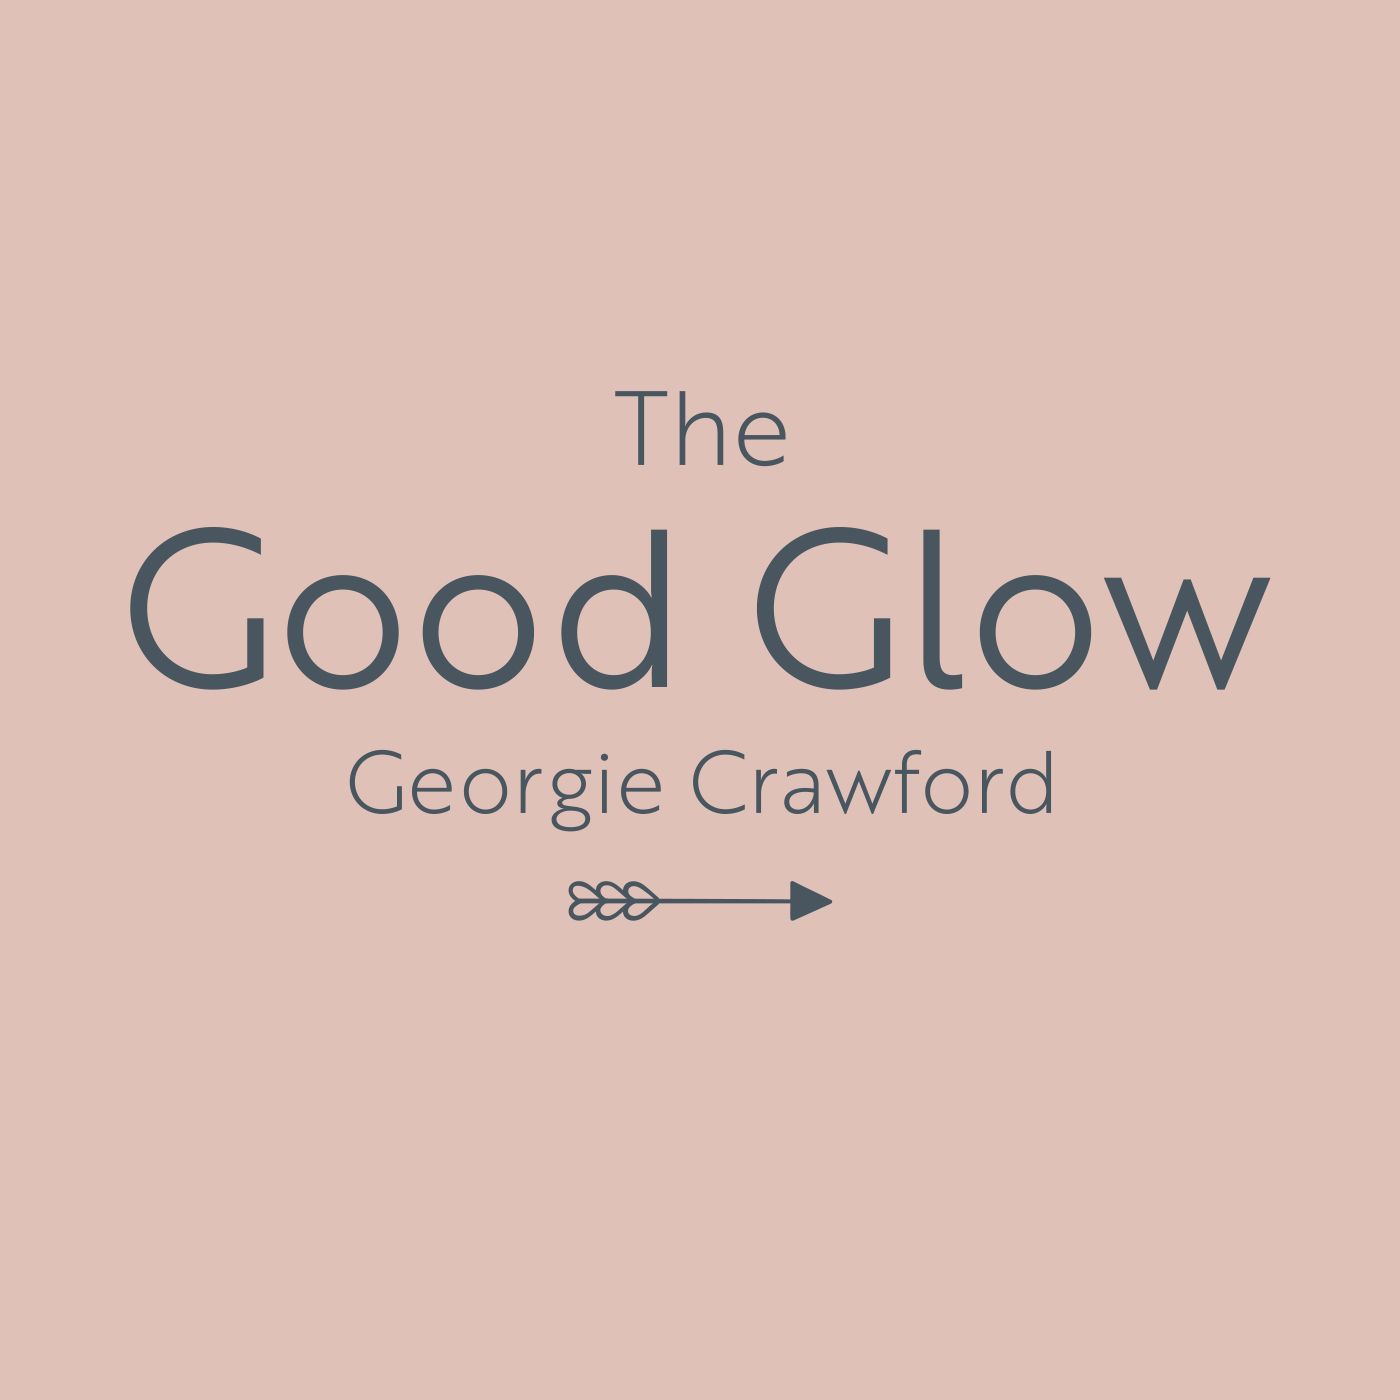 The Good Glow